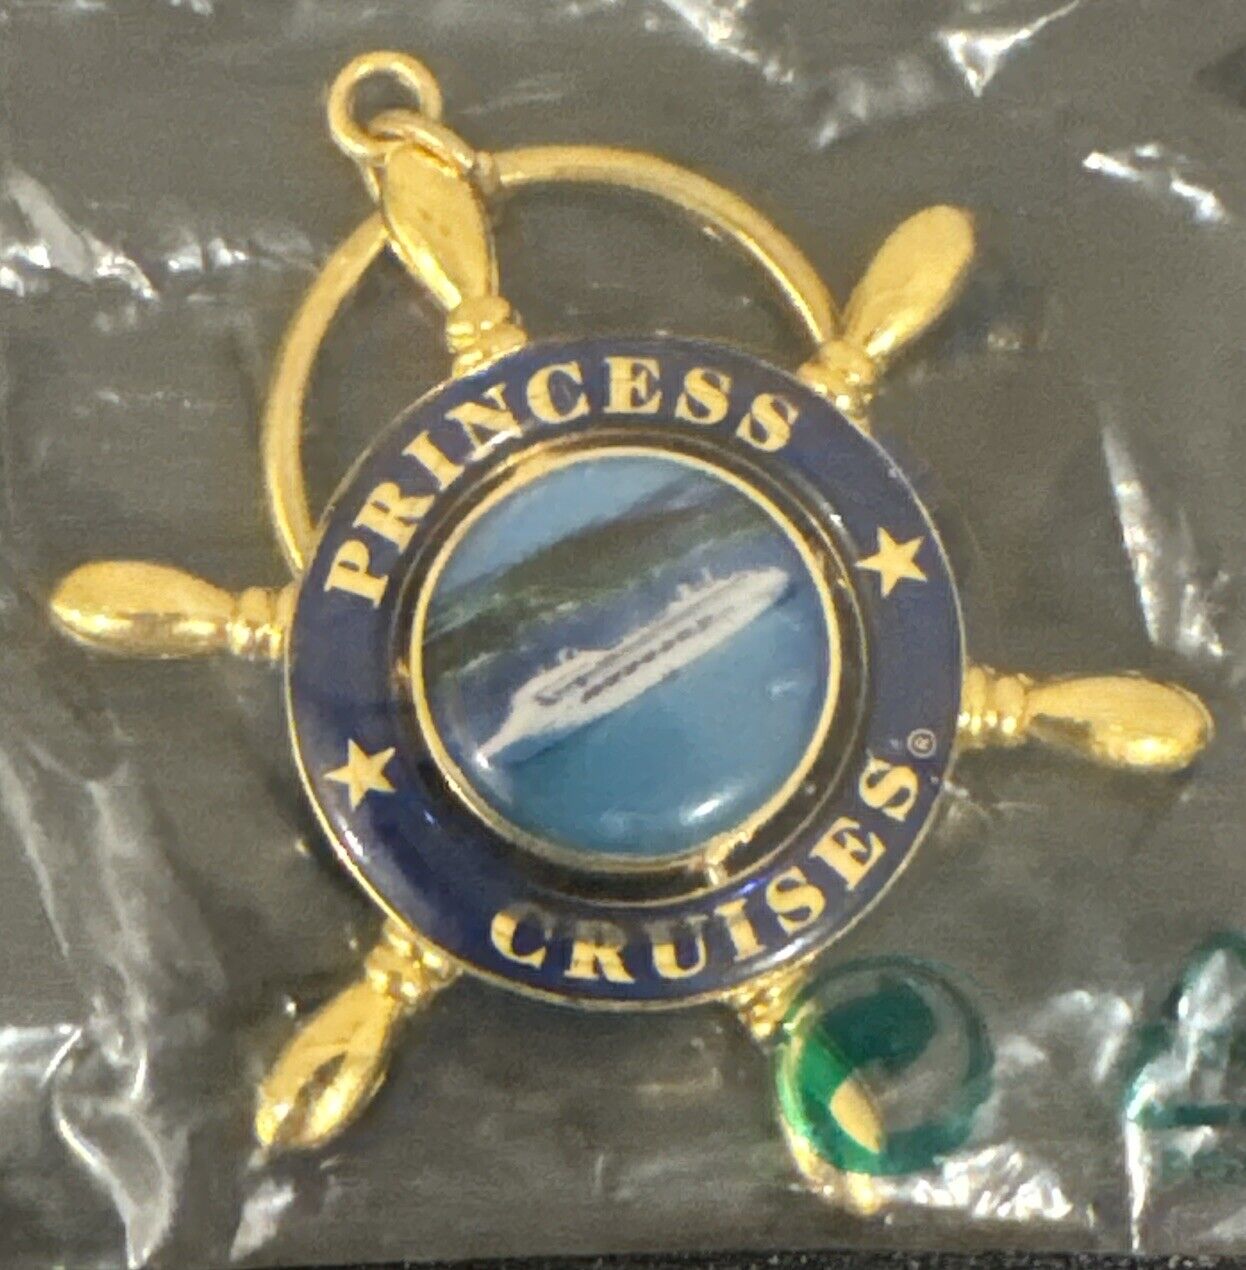 Vintage 💛 Regal Princess Cruises Collector Souvenir Helm Keychain Keyring🚢 NOS